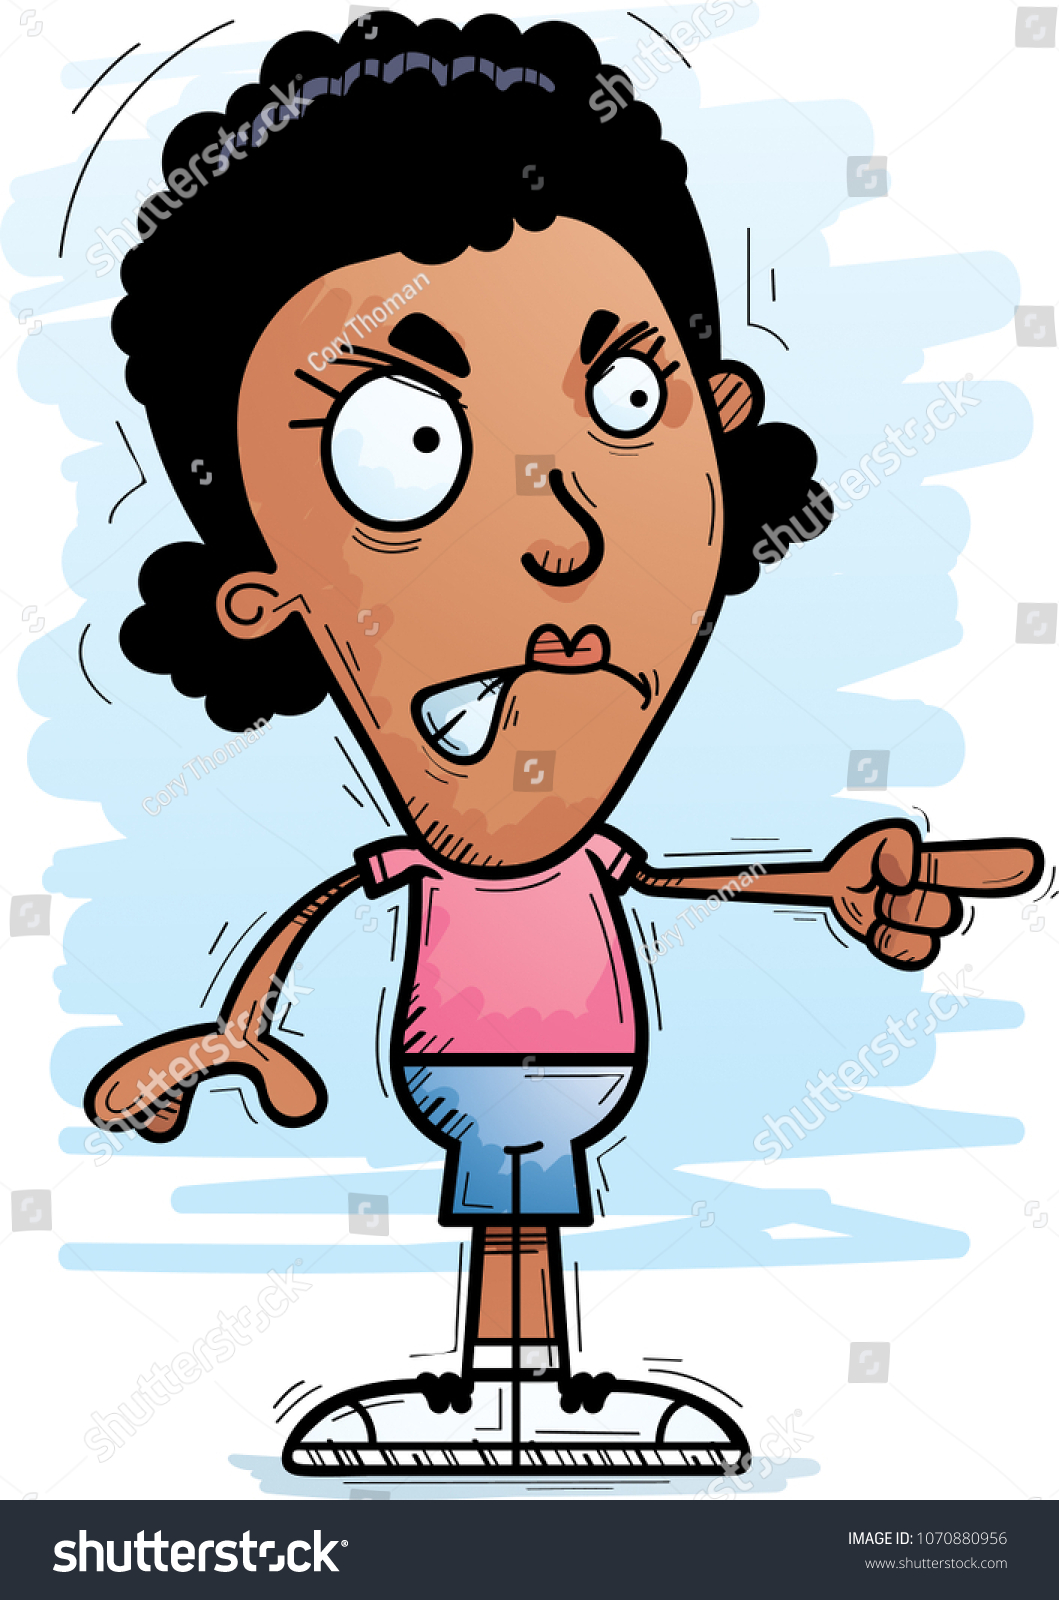 Cartoon Illustration Black Woman Looking Angry Vetor Stock Livre De Direitos 1070880956 9151